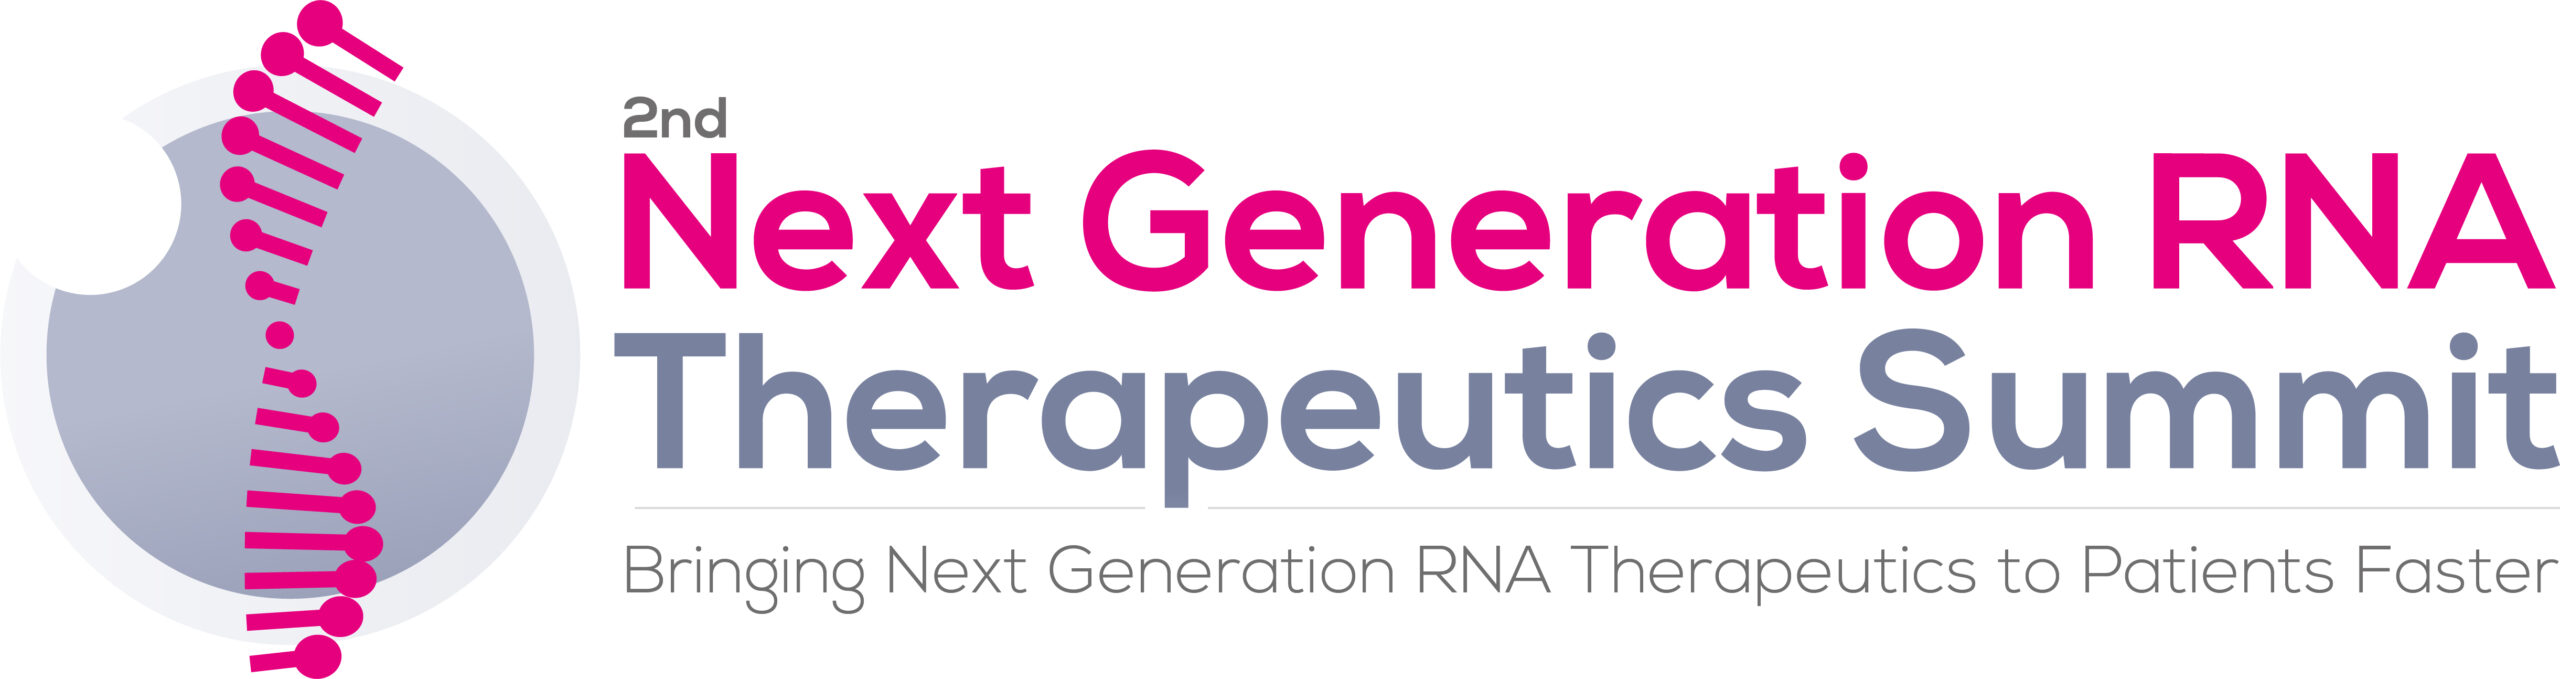 HW221201 31670 ΓÇô 2nd Next Generation RNA Therapeutics summit logo